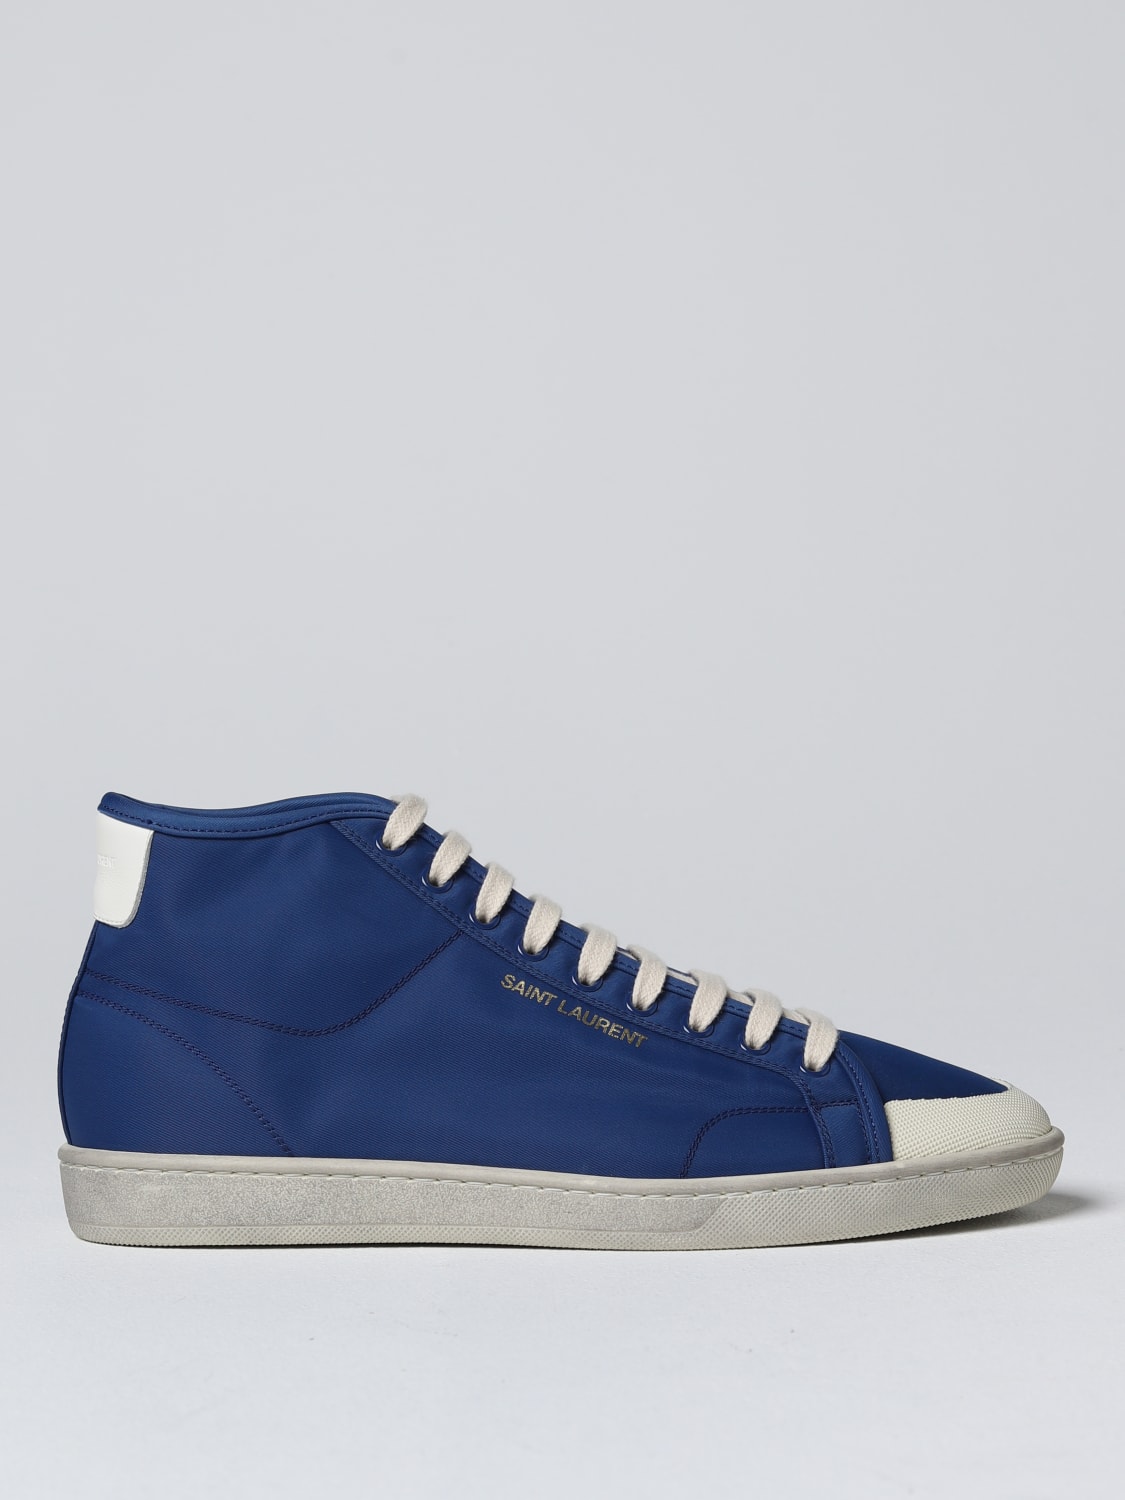 SAINT SL/39 sneakers in - Blue | Saint Laurent sneakers 732272AABPQ online on GIGLIO.COM